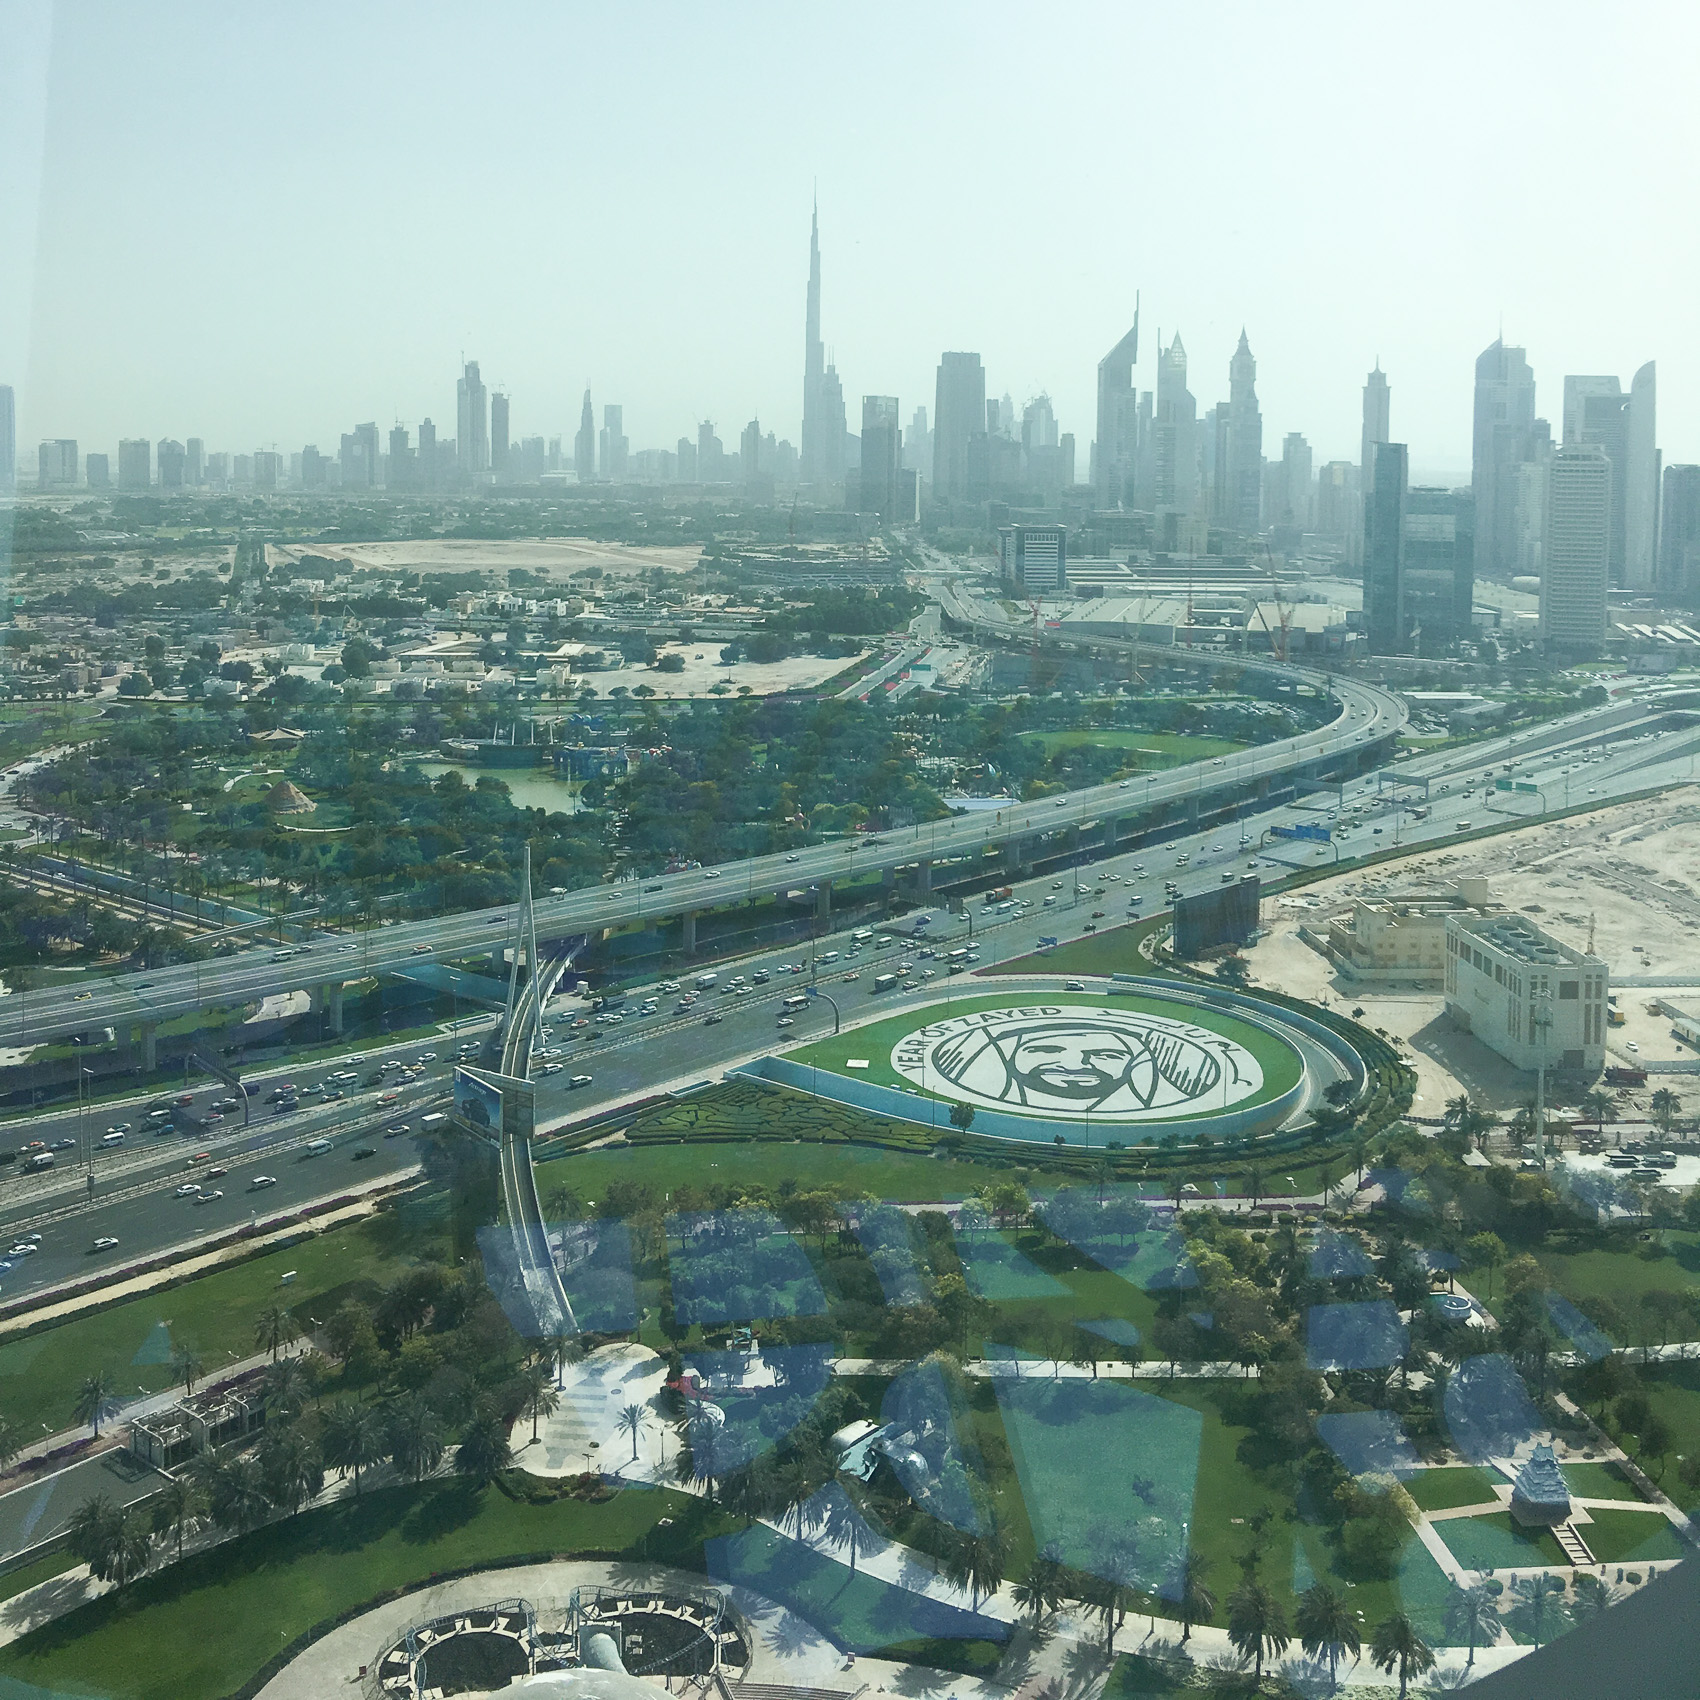 The Dubai Frame - Views to Burj Khalifa